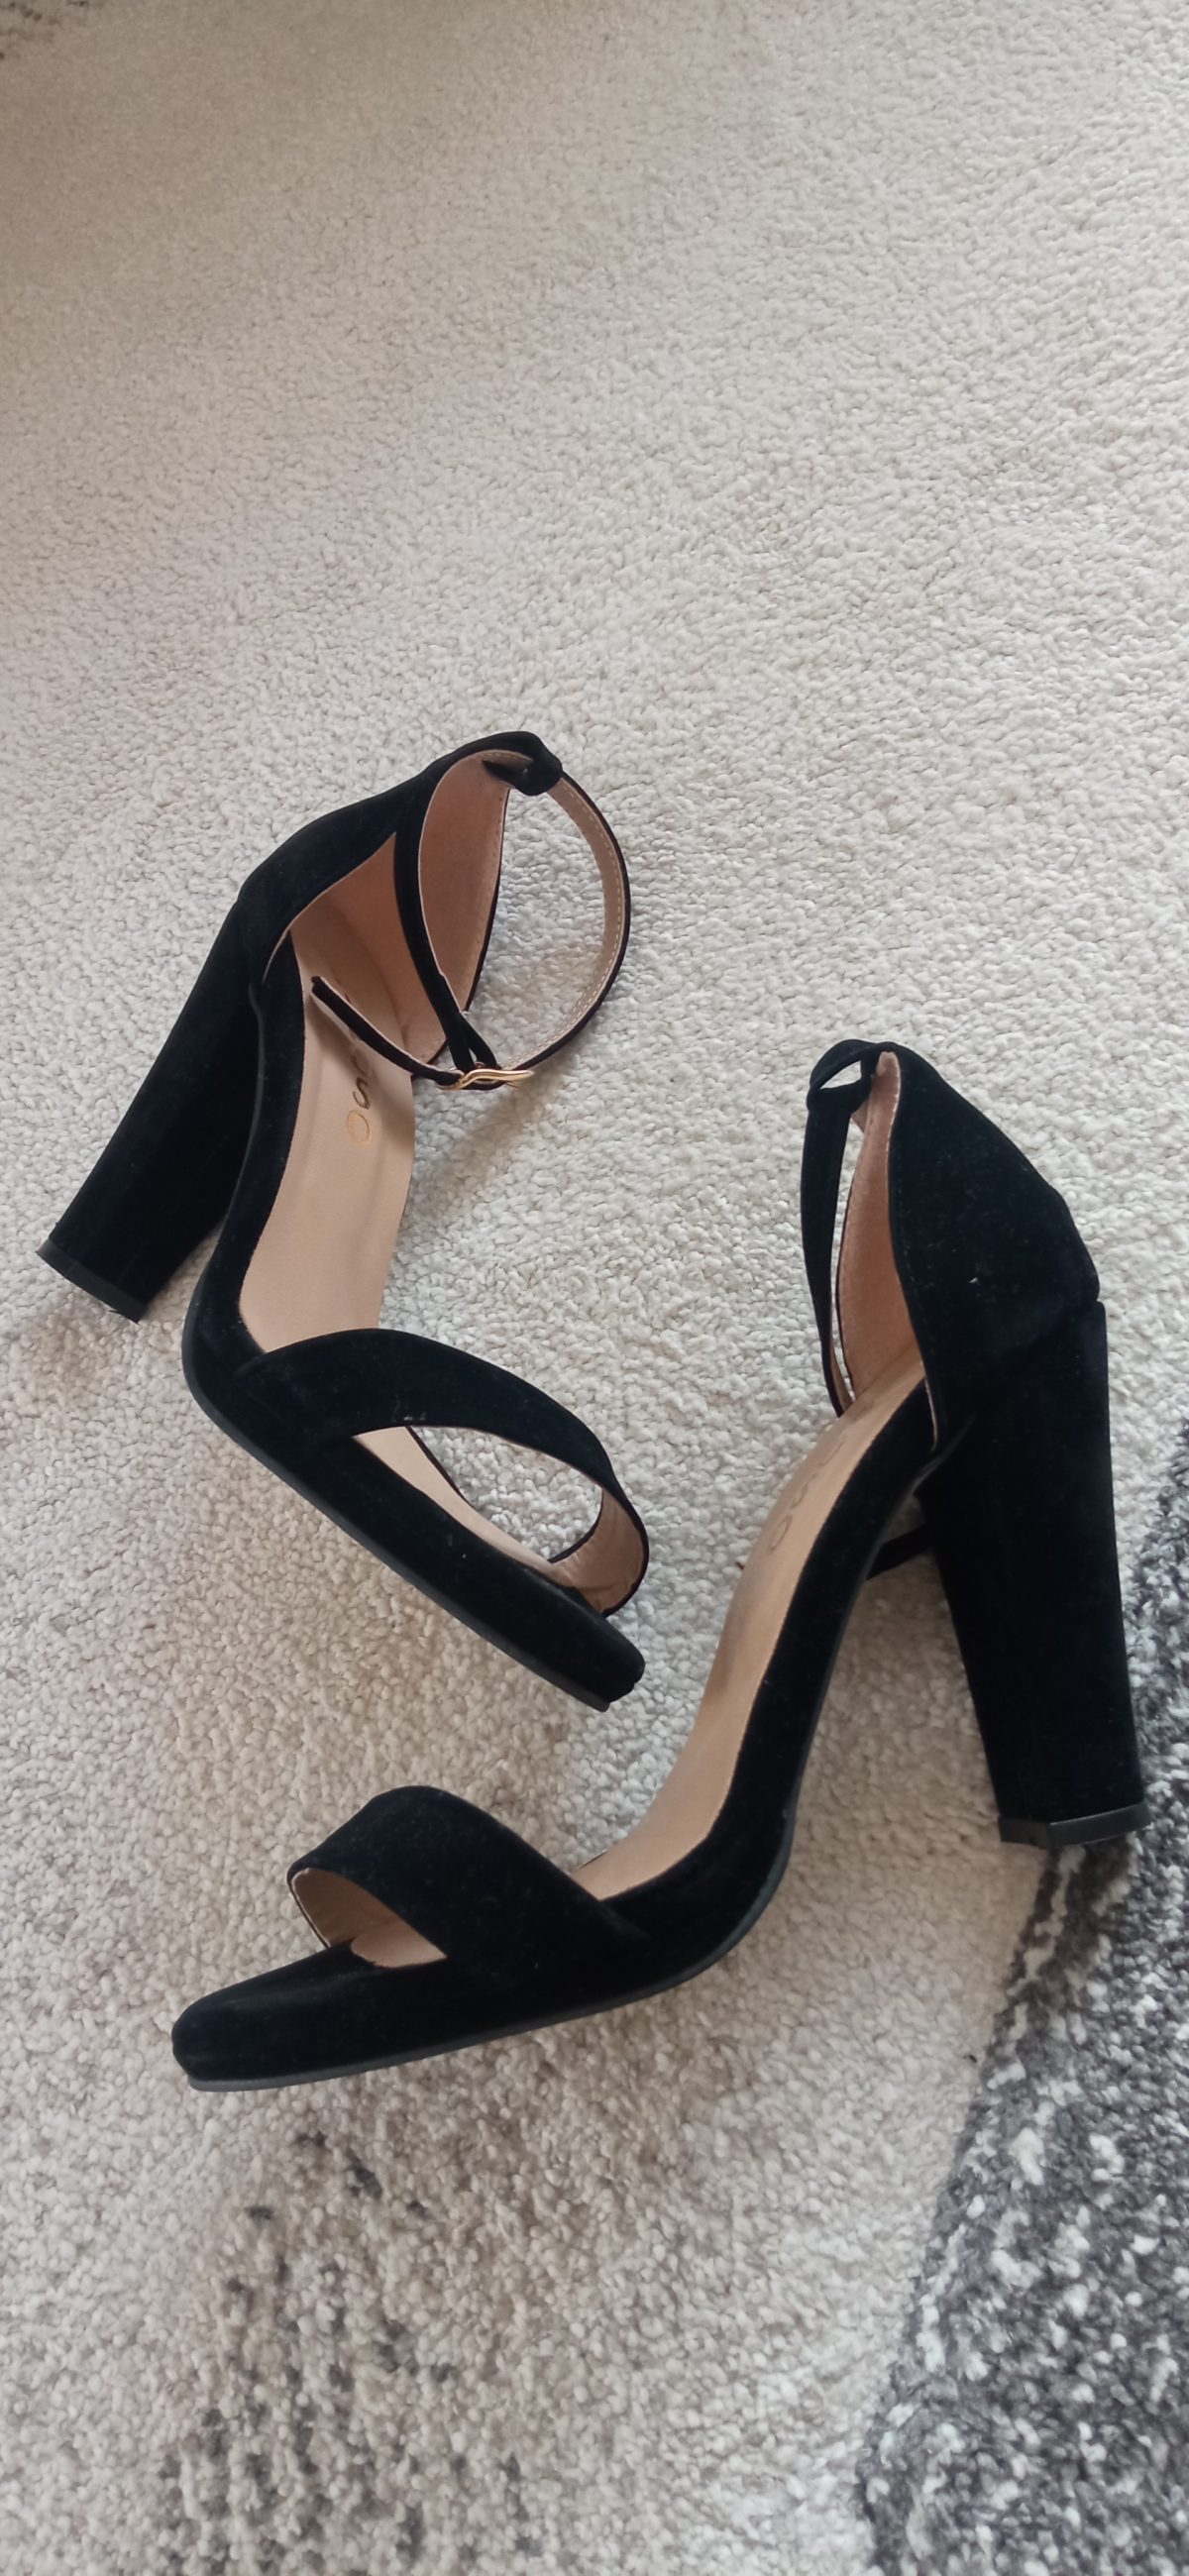 Crne sandale na štiklu - FashionTrampa